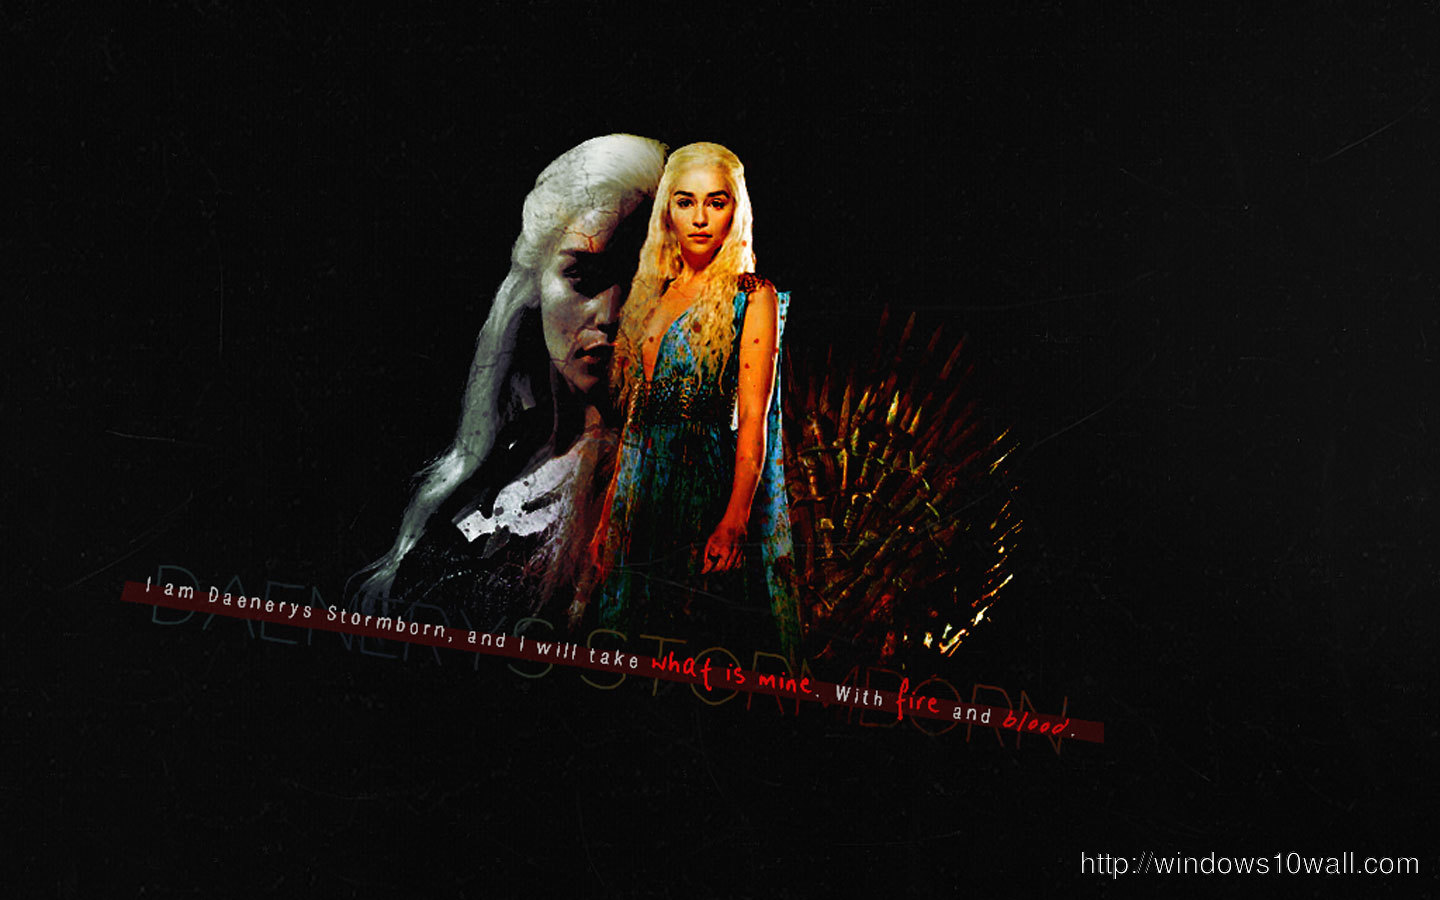 Free Daenerys Targaryen wallpaper